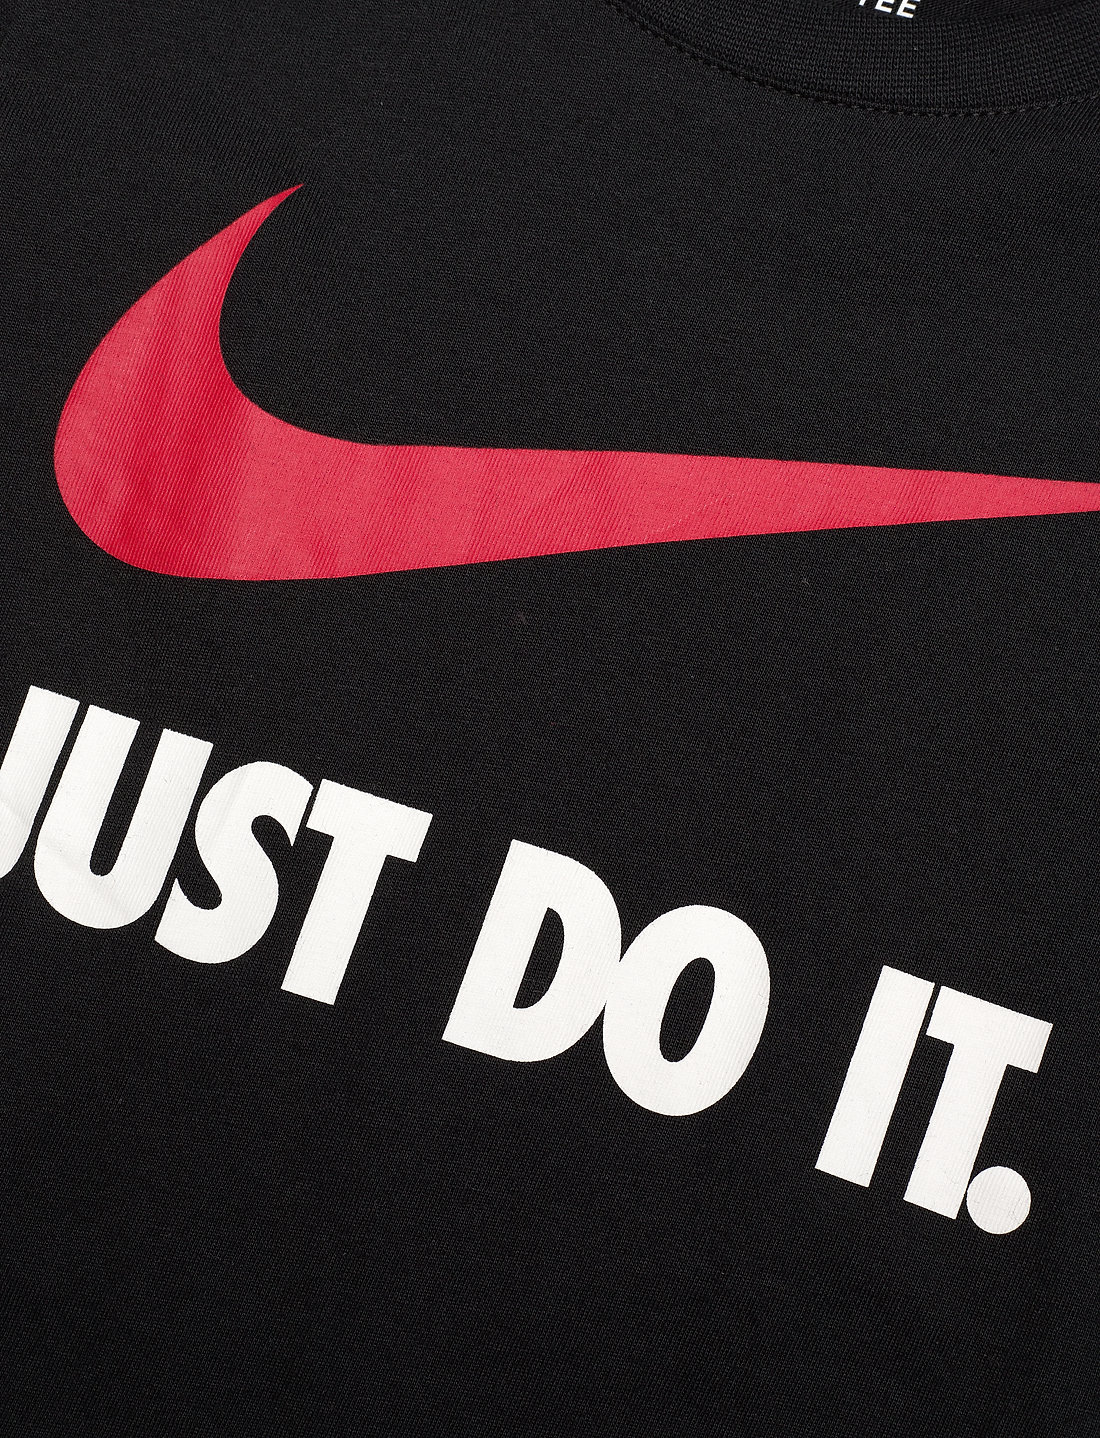 Nike Nkb Swoosh Jdi Ss Tee / Nkb Swoosh Jdi Ss Tee - Short-sleeved